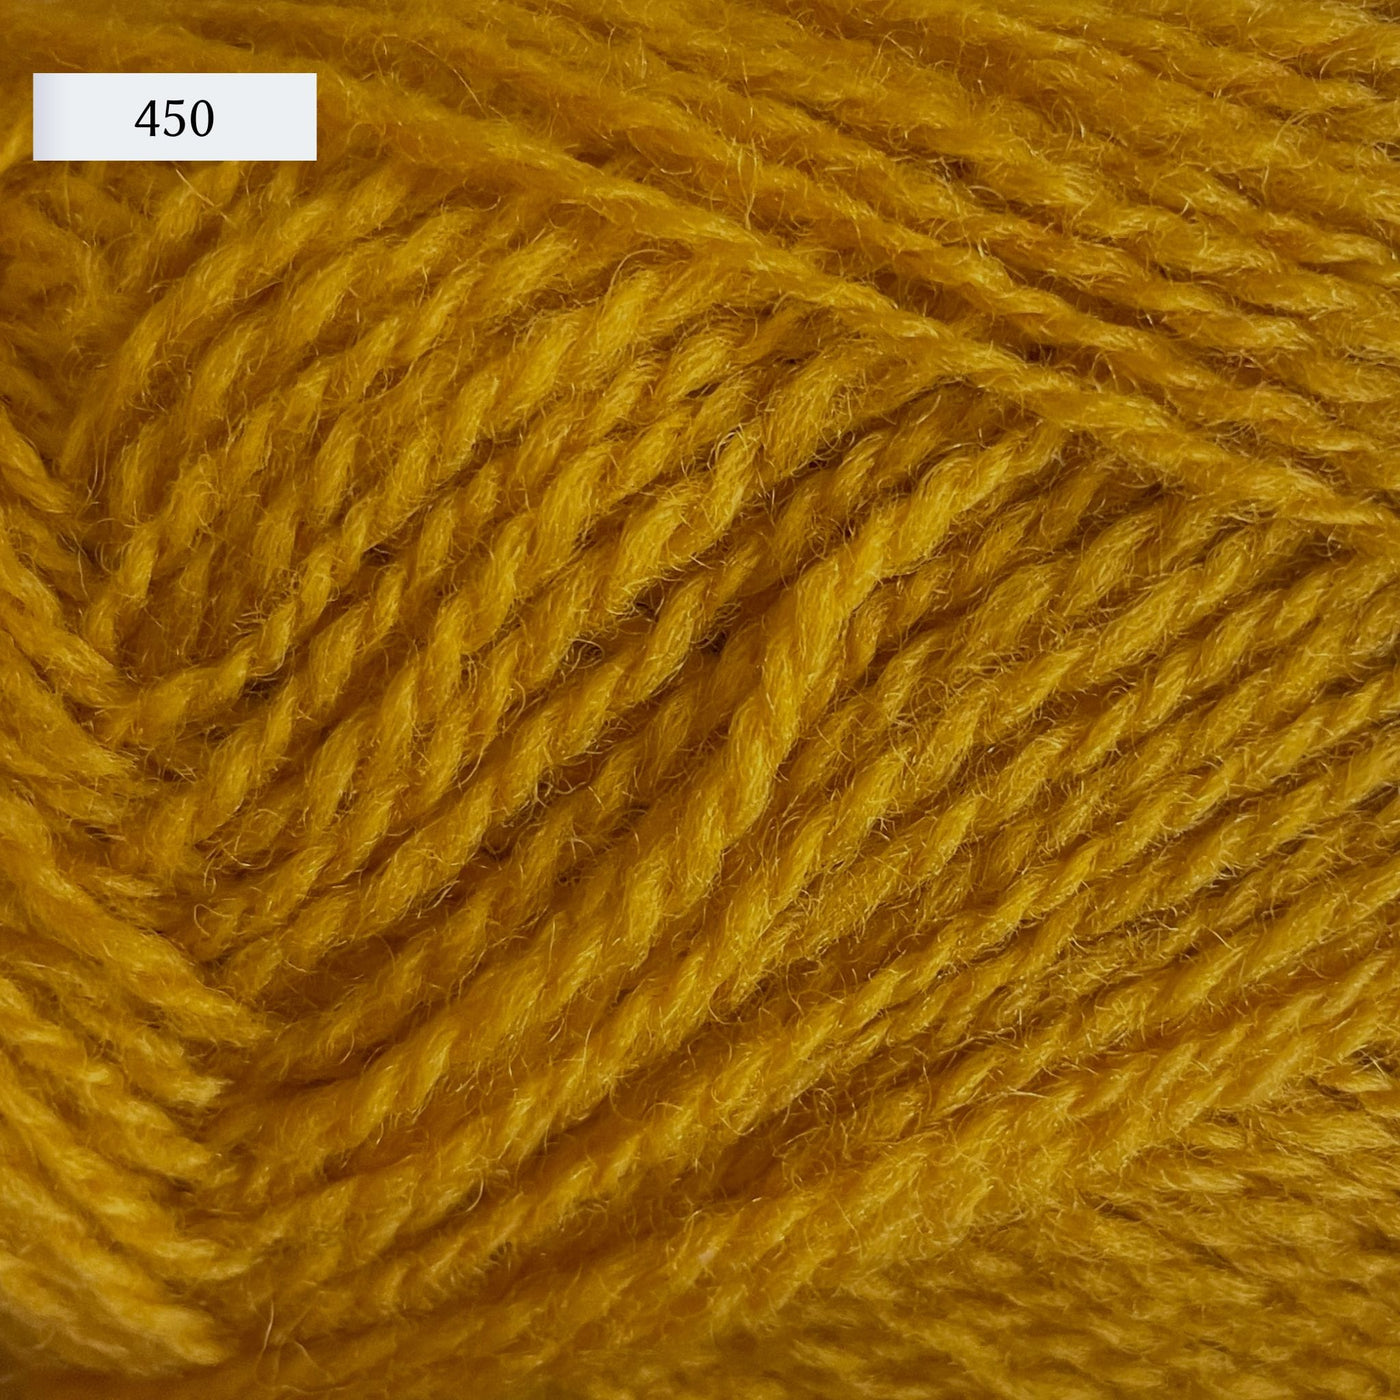 Rauma Finullgarn, a fingering/sport weight yarn, in color 450, a golden yellow